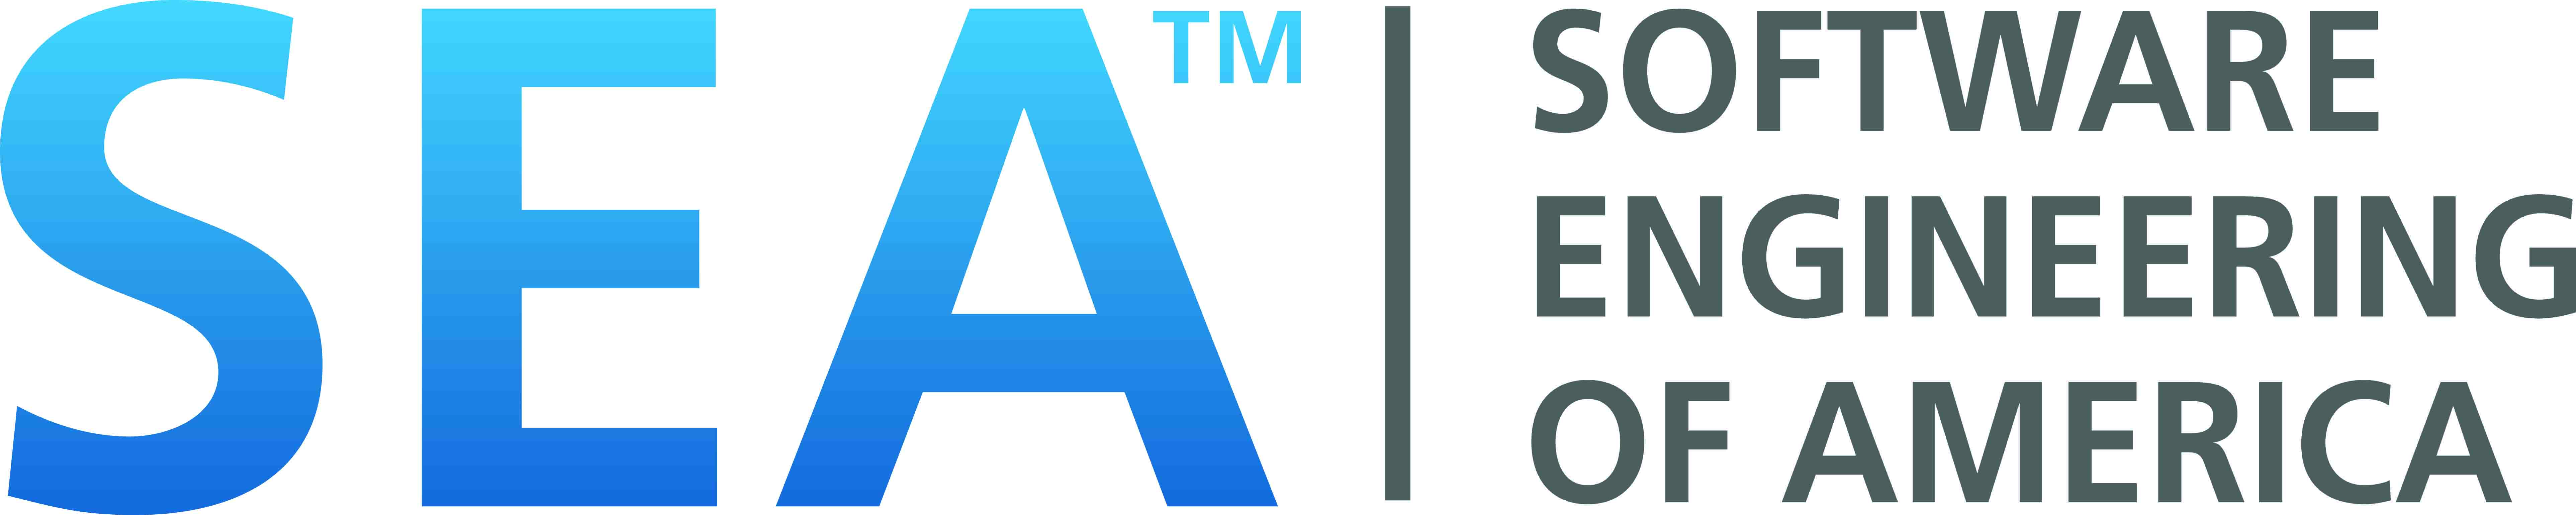 Software Engineering of America (SEA) – SMB Logo